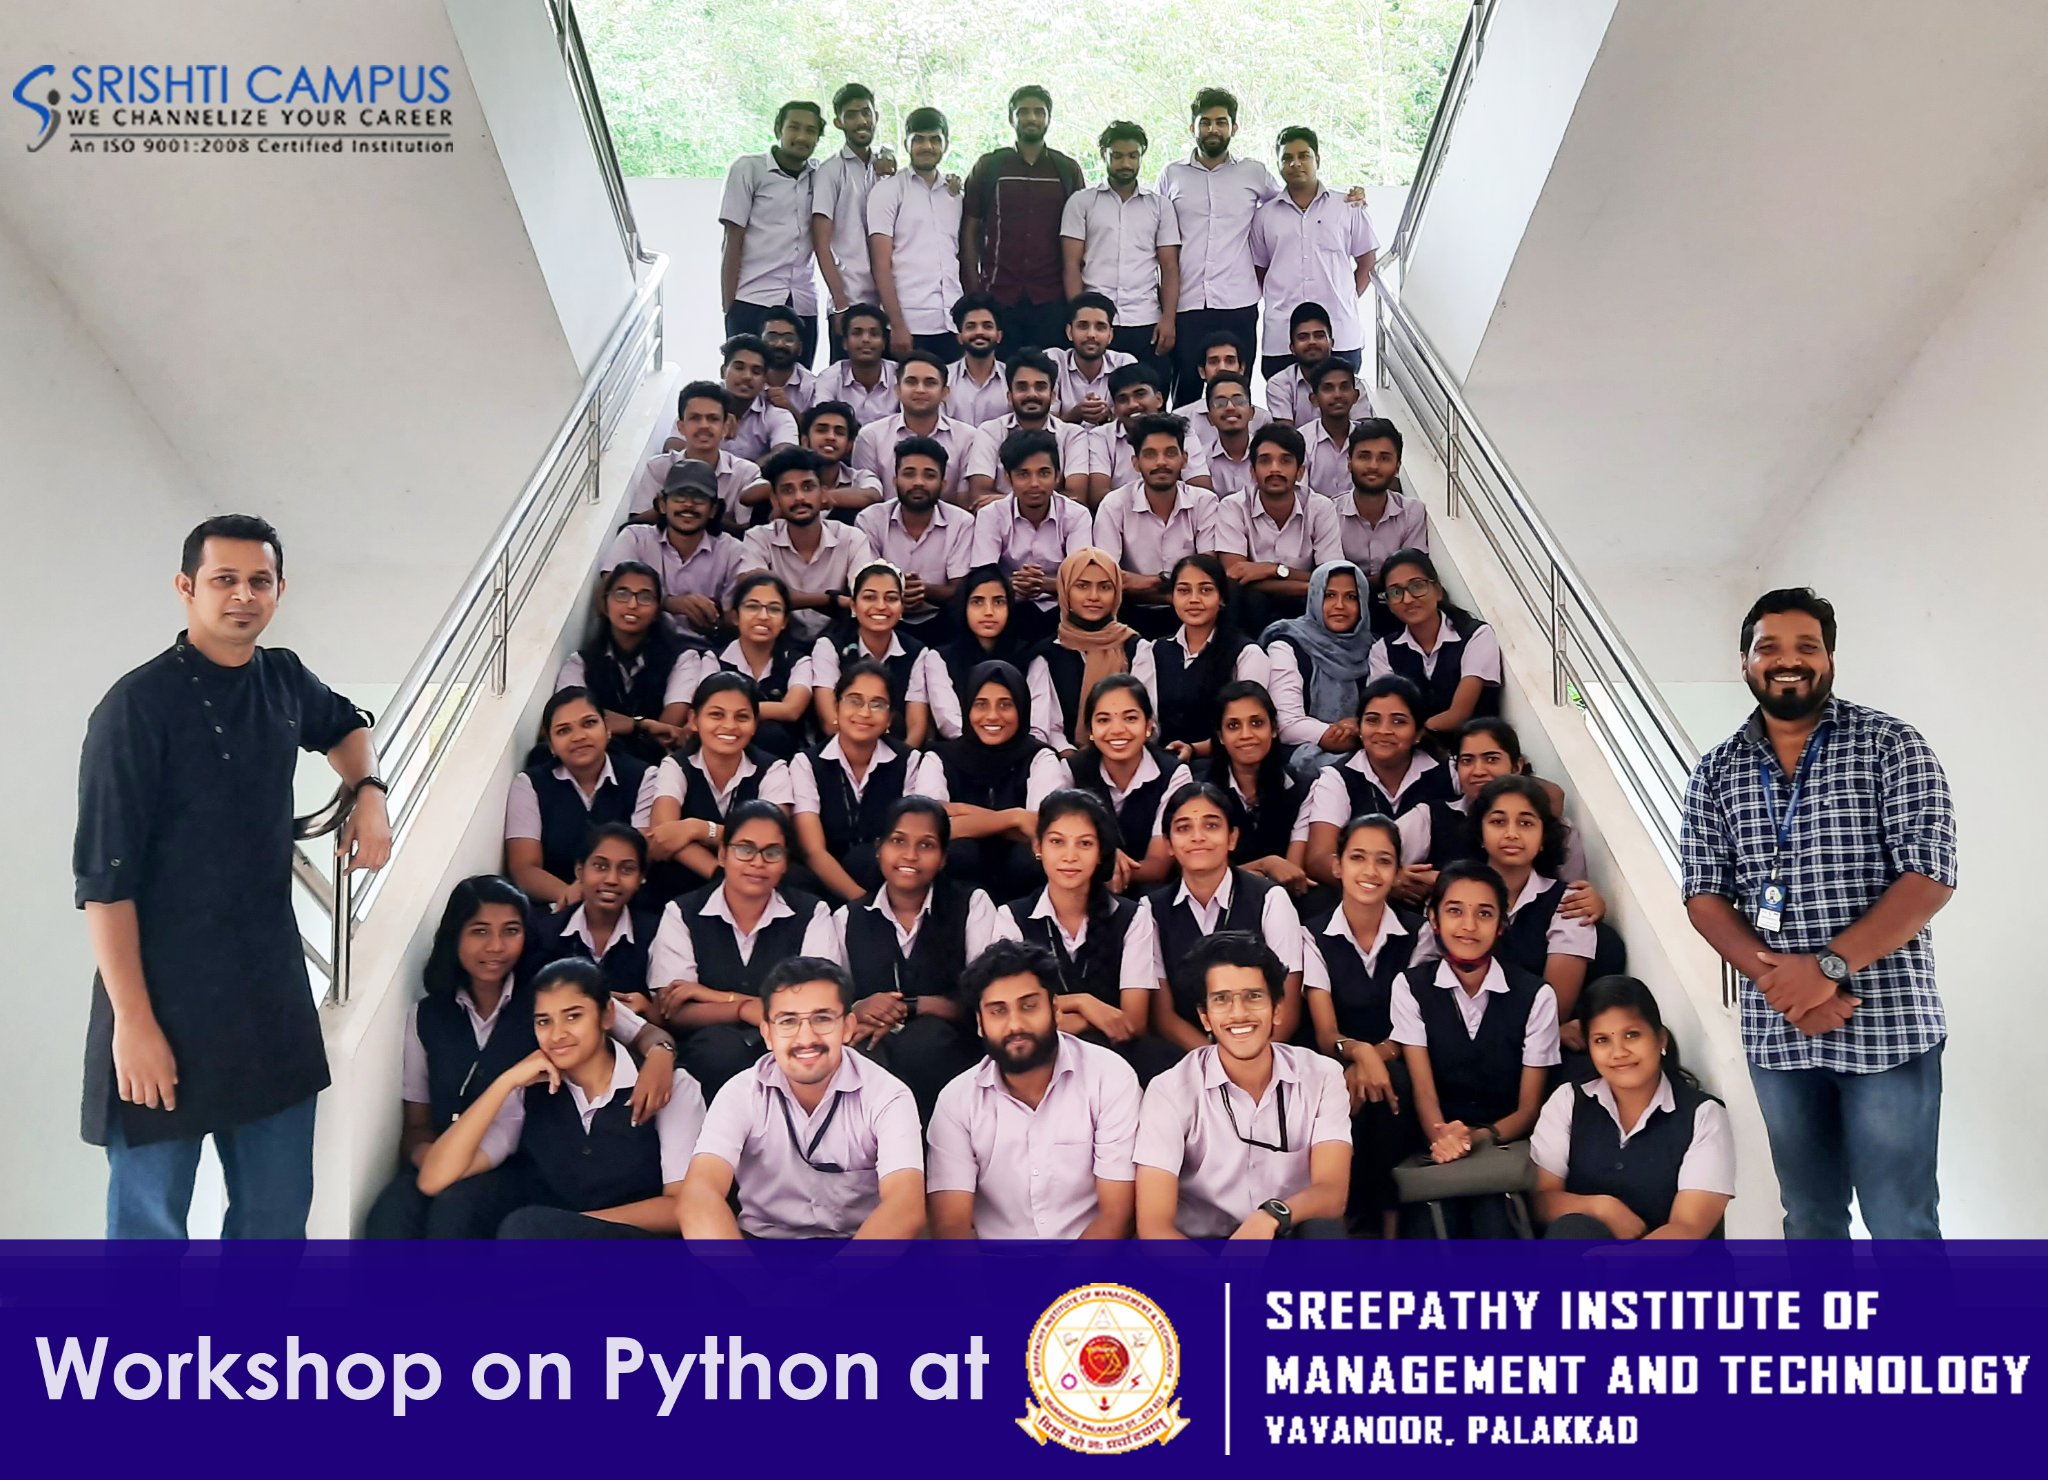 srishti campus SRISHTI CAMPUS PROVIDES A WORKSHOP ON PYTHON TO THE STUDENTS OF SREEPATHY INSTITUTE OF MANAGEMENT AND TECHNOLOGY trivandrum